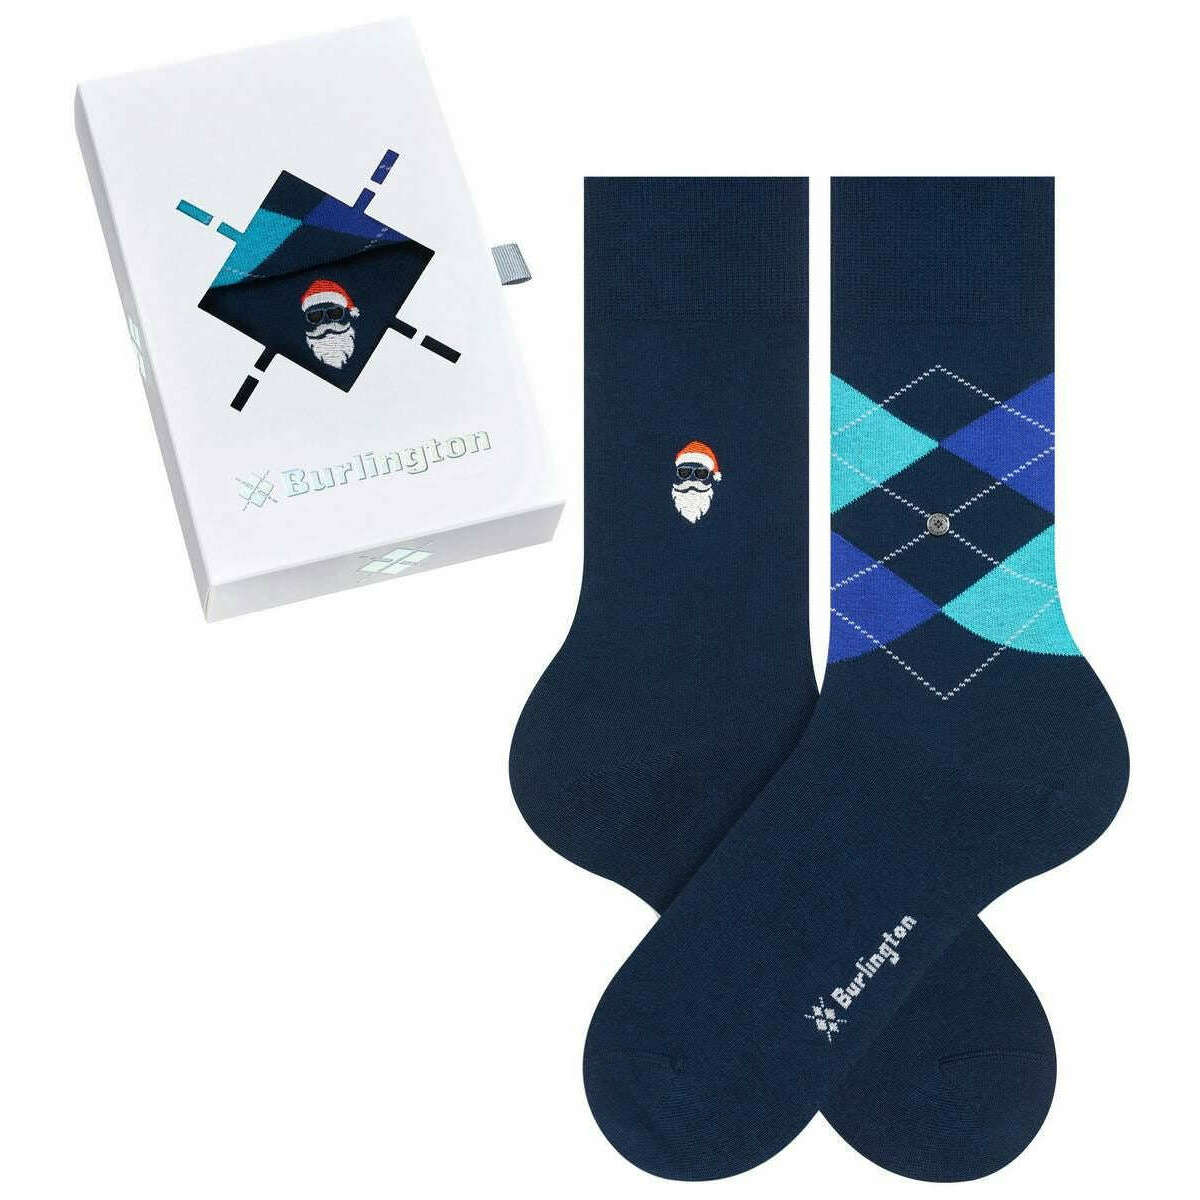 Burlington Everyday X-Mas 2 Pack Gift Box Socks - Navy Blue/Blue